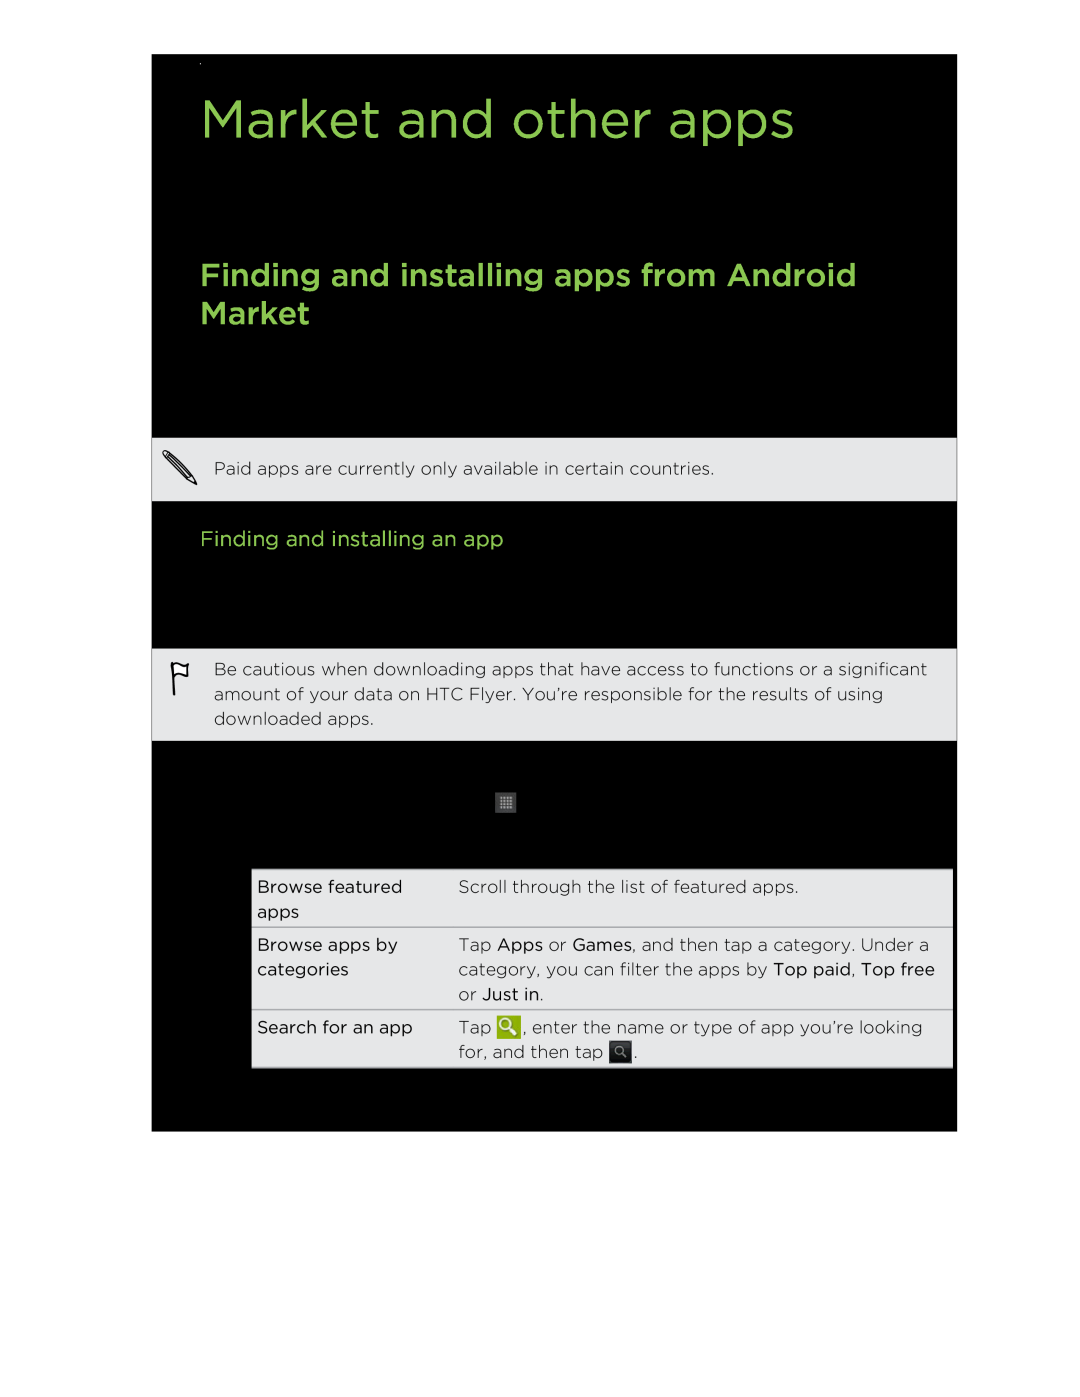 HTC HTCFlyerP512 Market and other apps, Finding and installing apps from Android Market, Finding and installing an app 